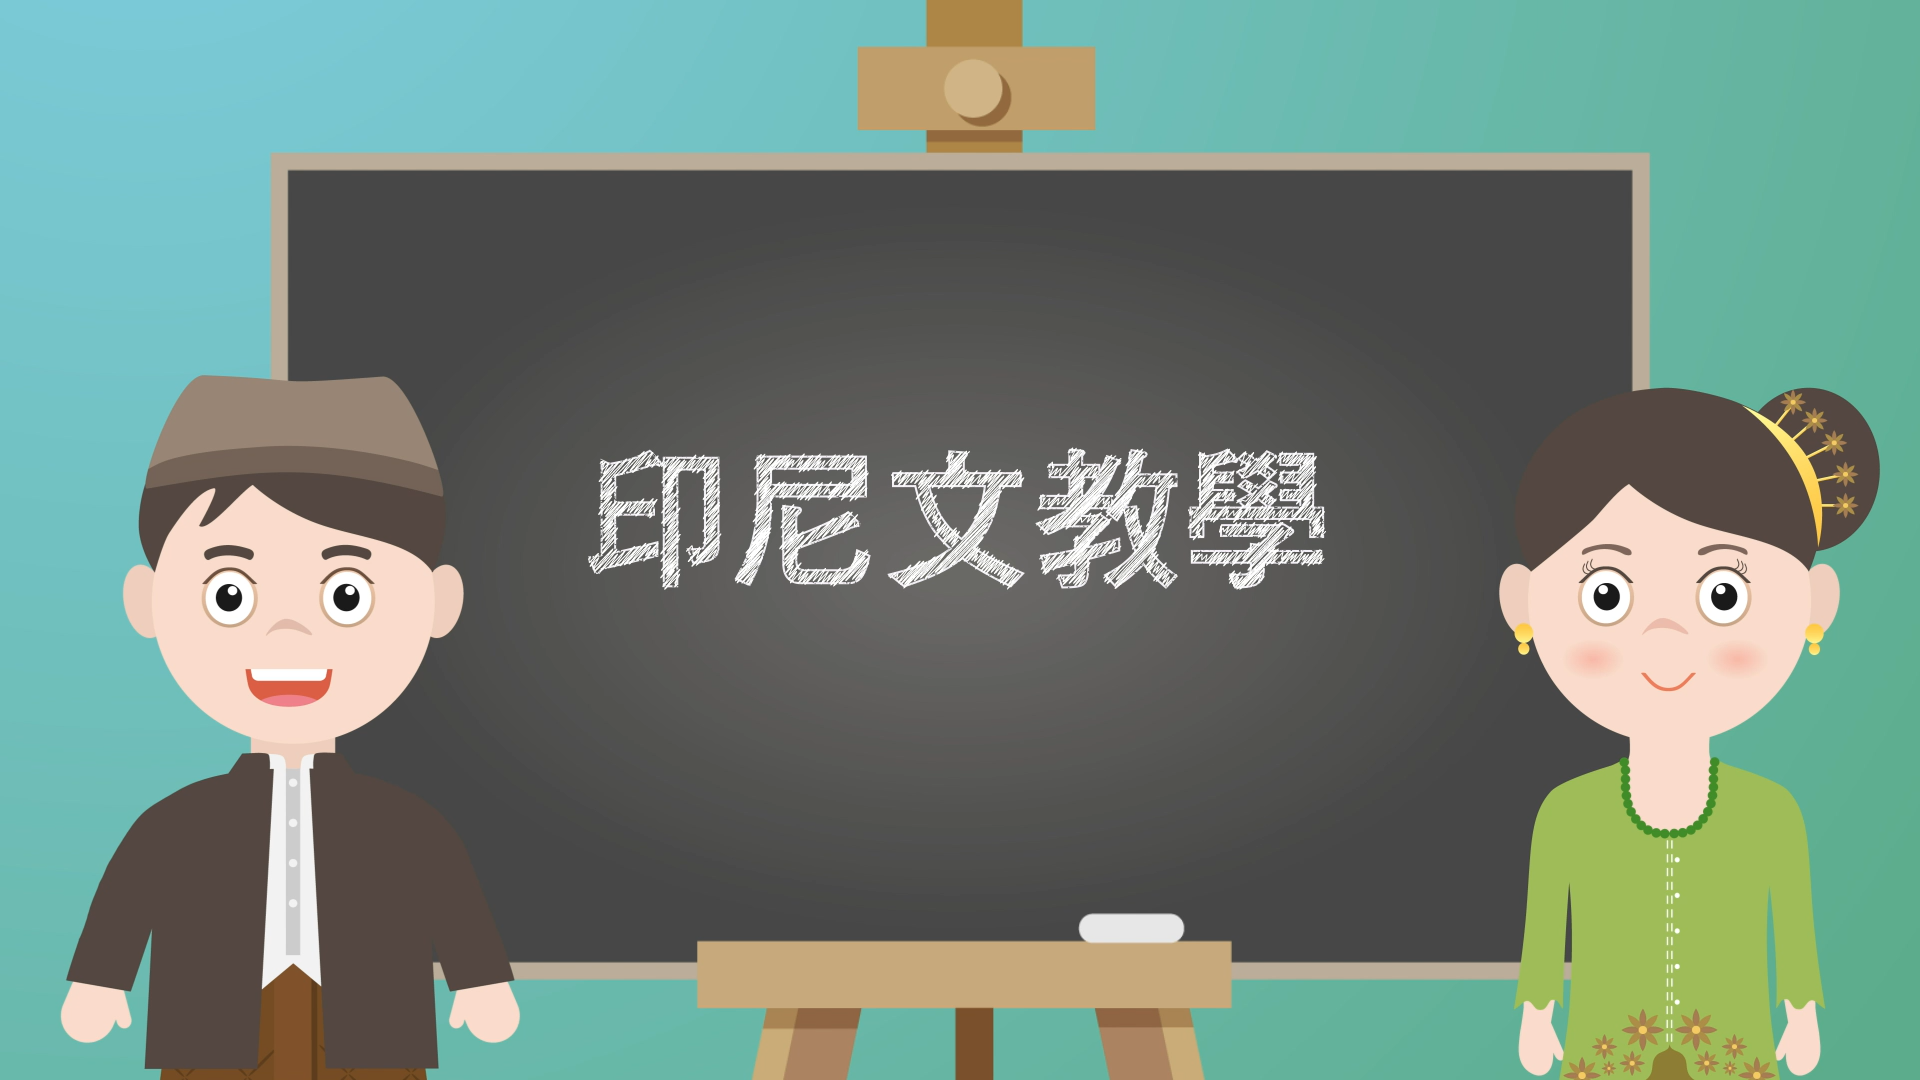 Belajar Bahasa Mandarin – Papan Reklame yang Membuat Salah Paham Penduduk Baru